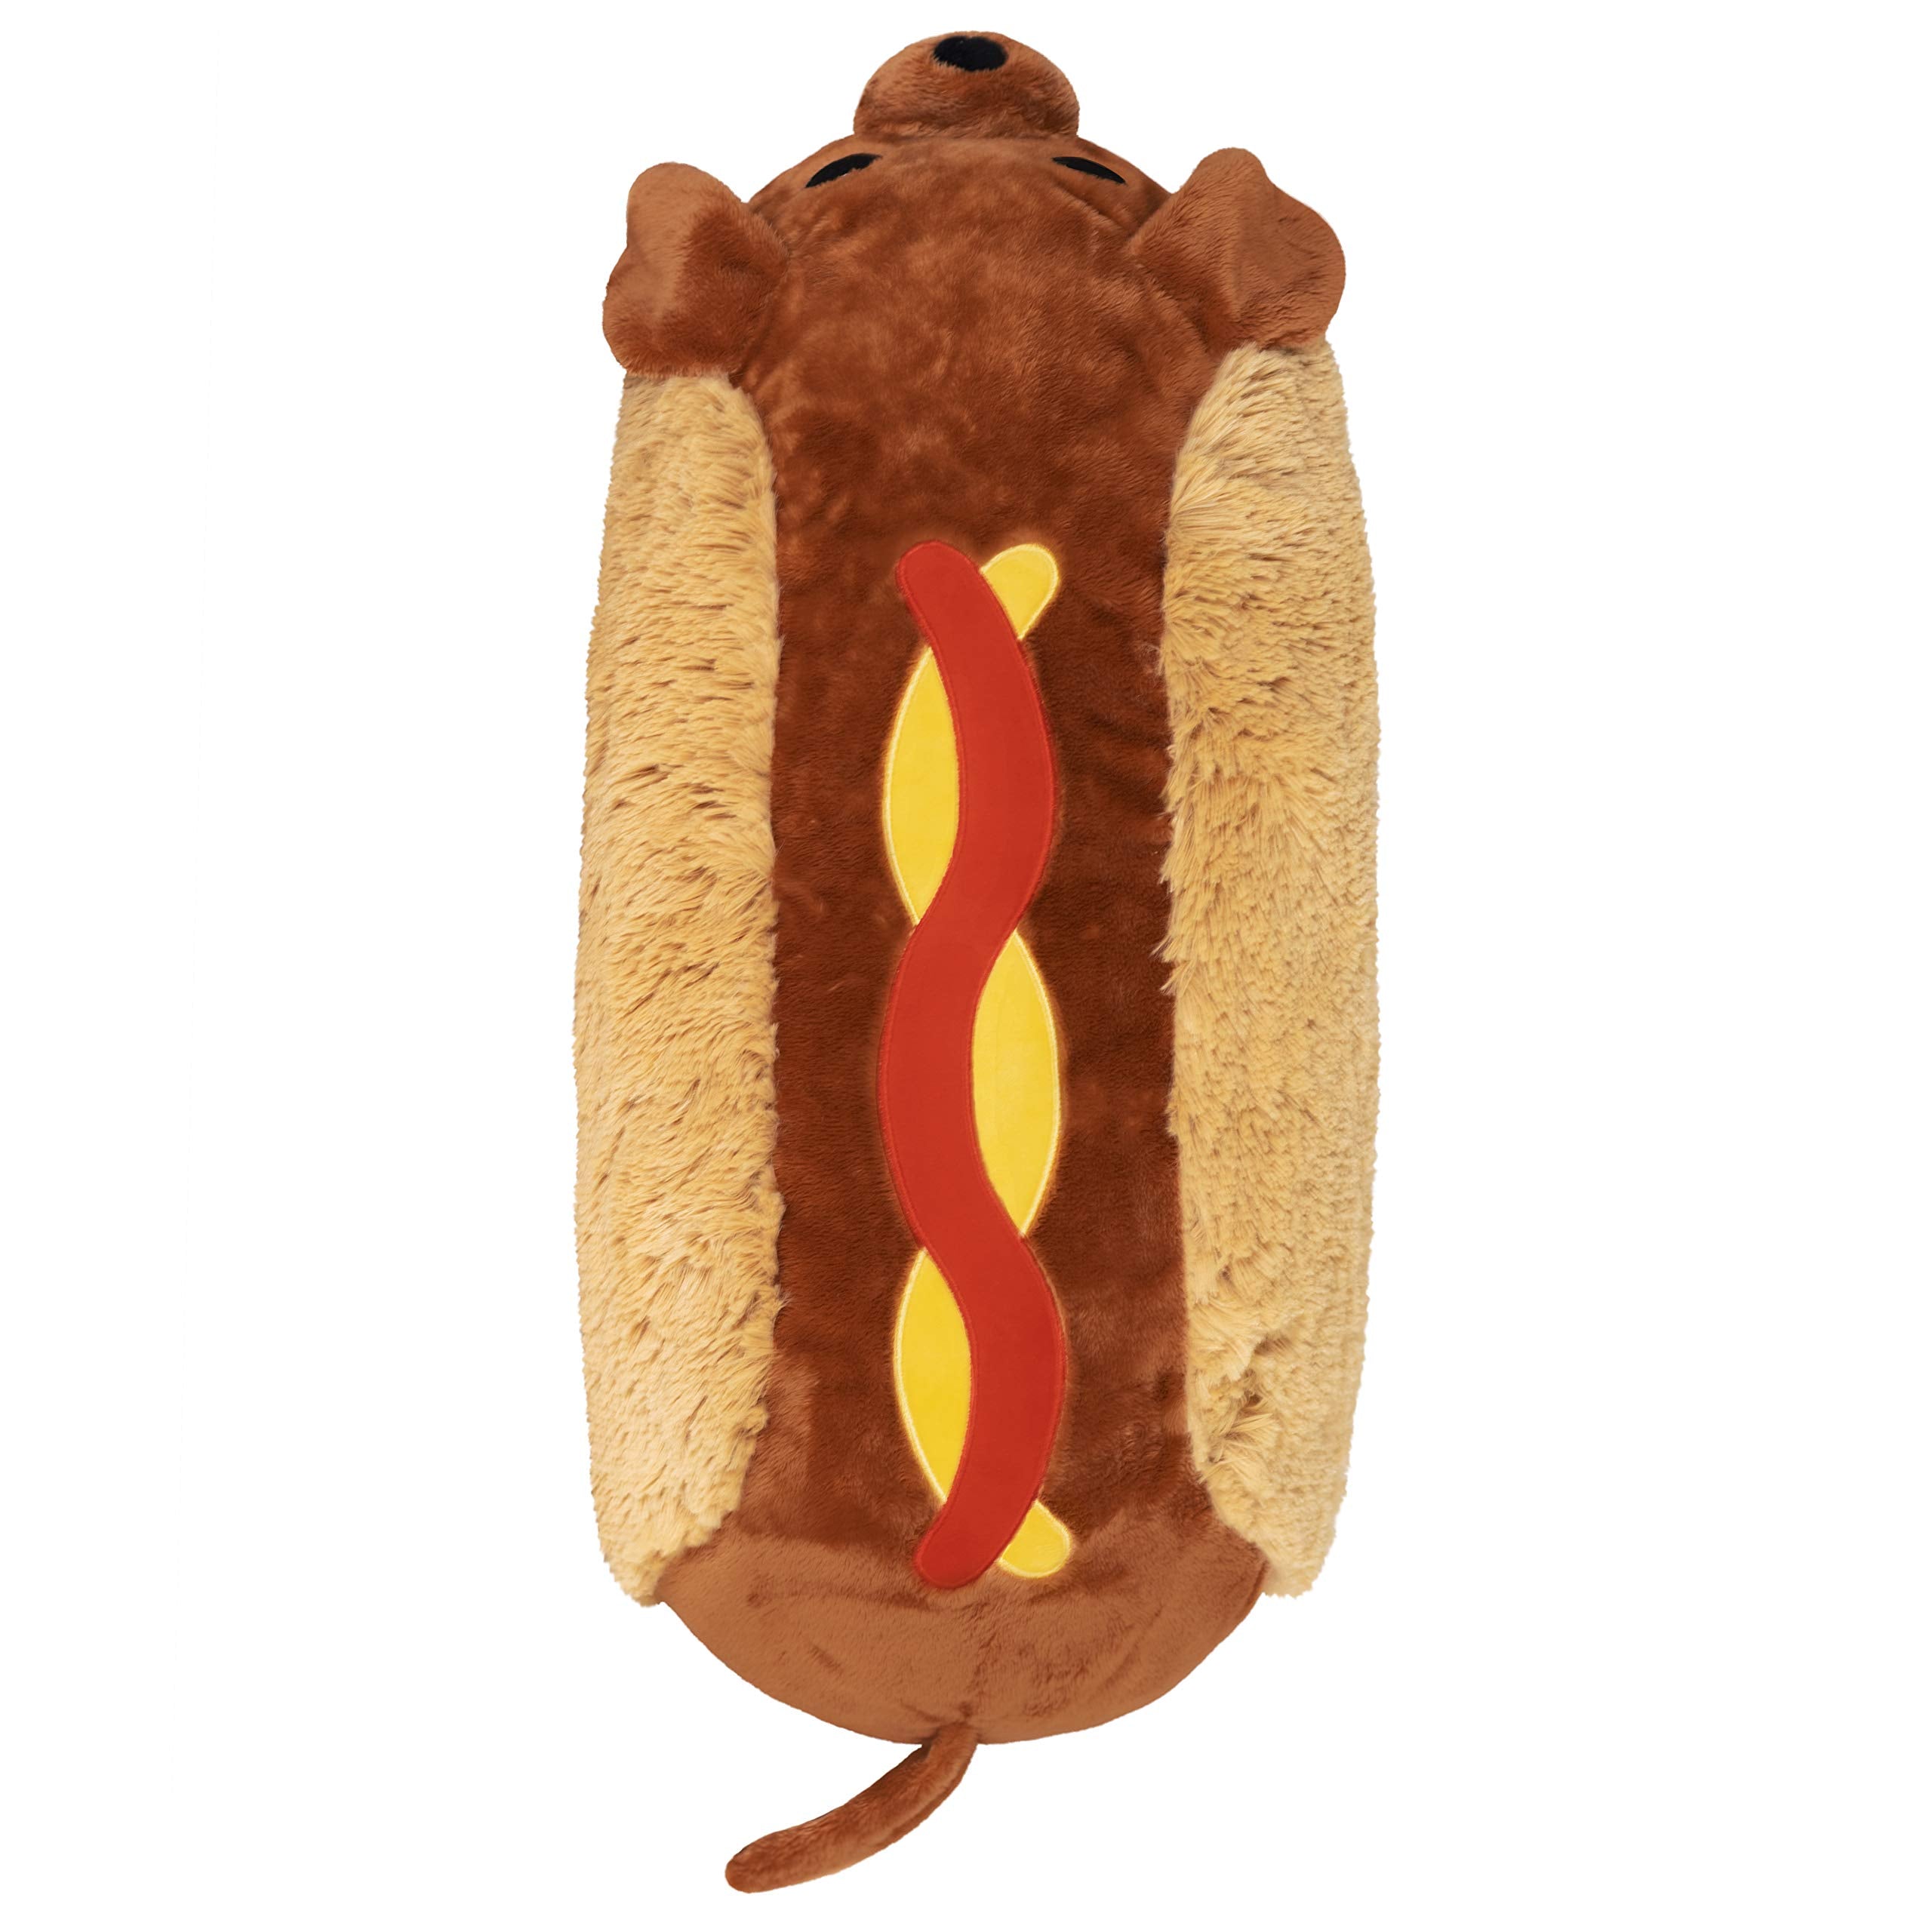 Squishable / Dachshund Hot Dog - 15"